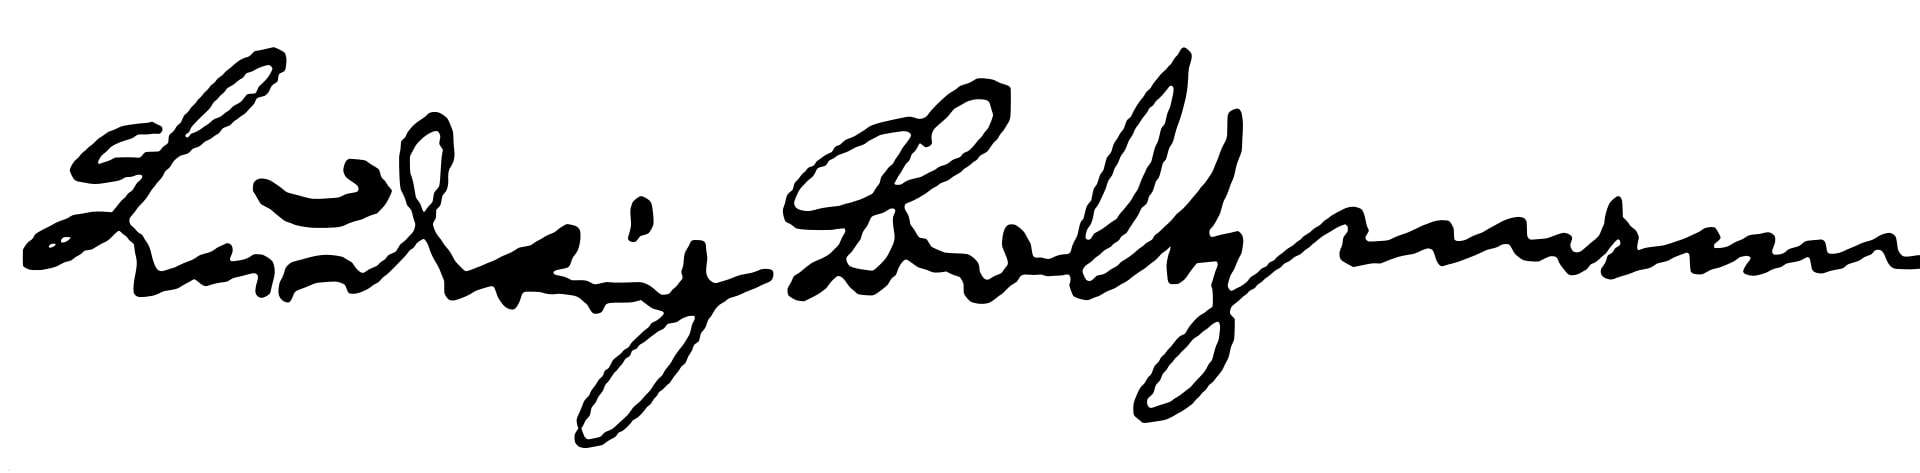 Ludwig Boltzmann Signature